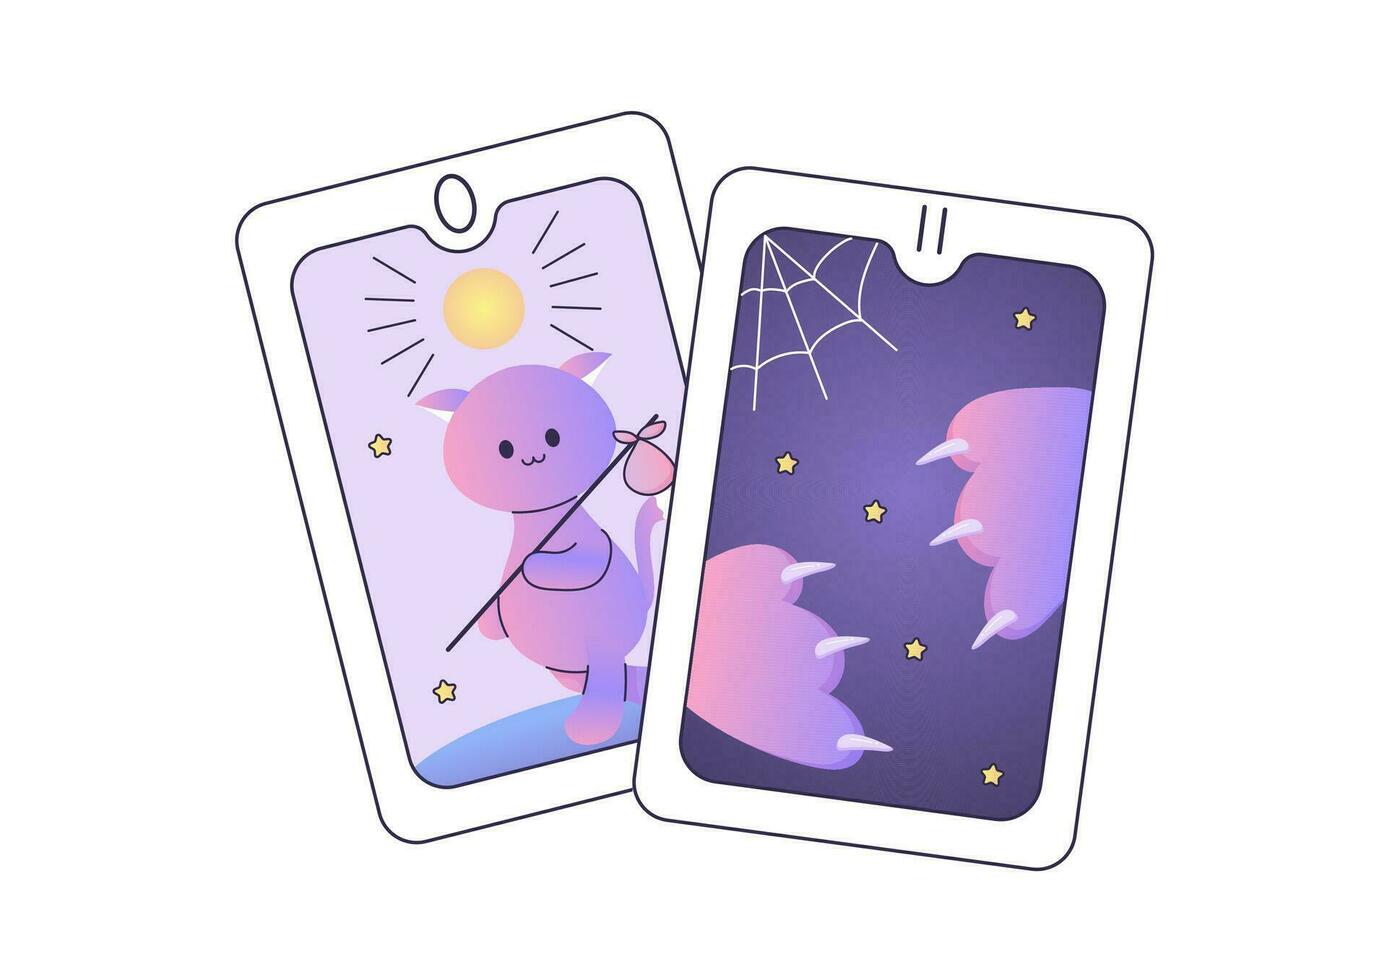 Tarot cards, magic, cute cartoon style with cats vector